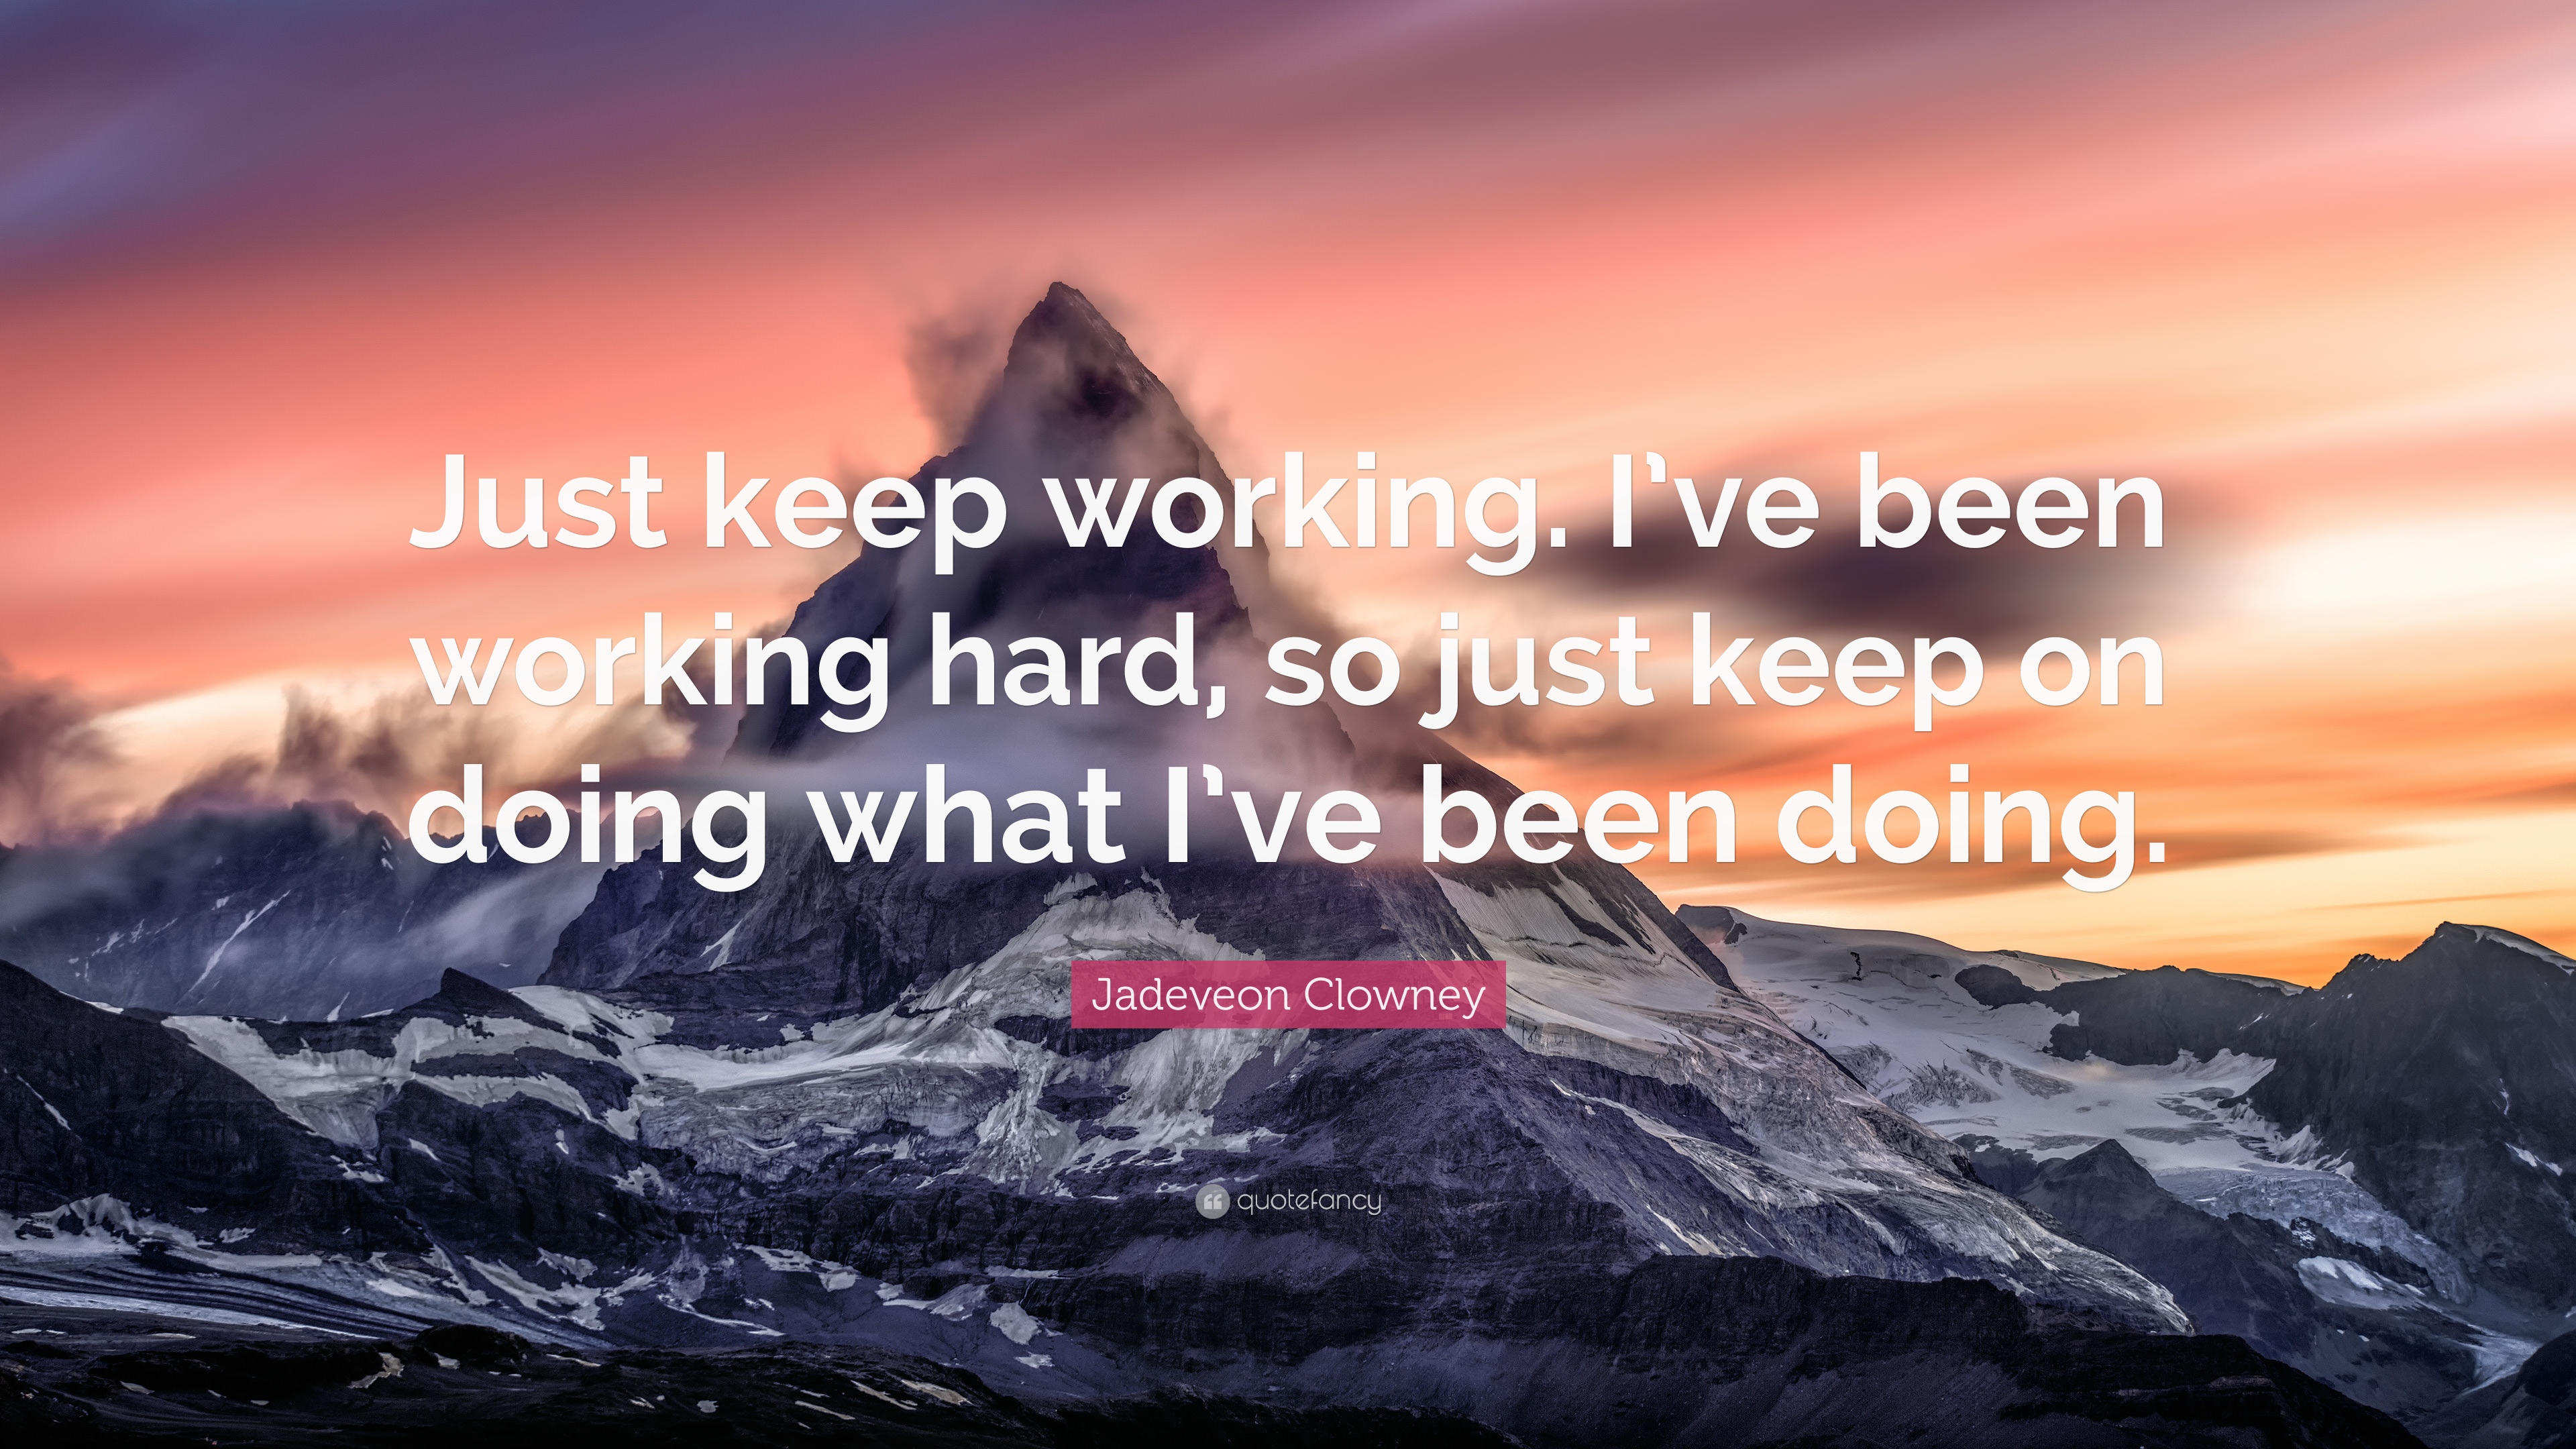 Jadeveon Clowney Quote: “Just keep working. I've been working hard